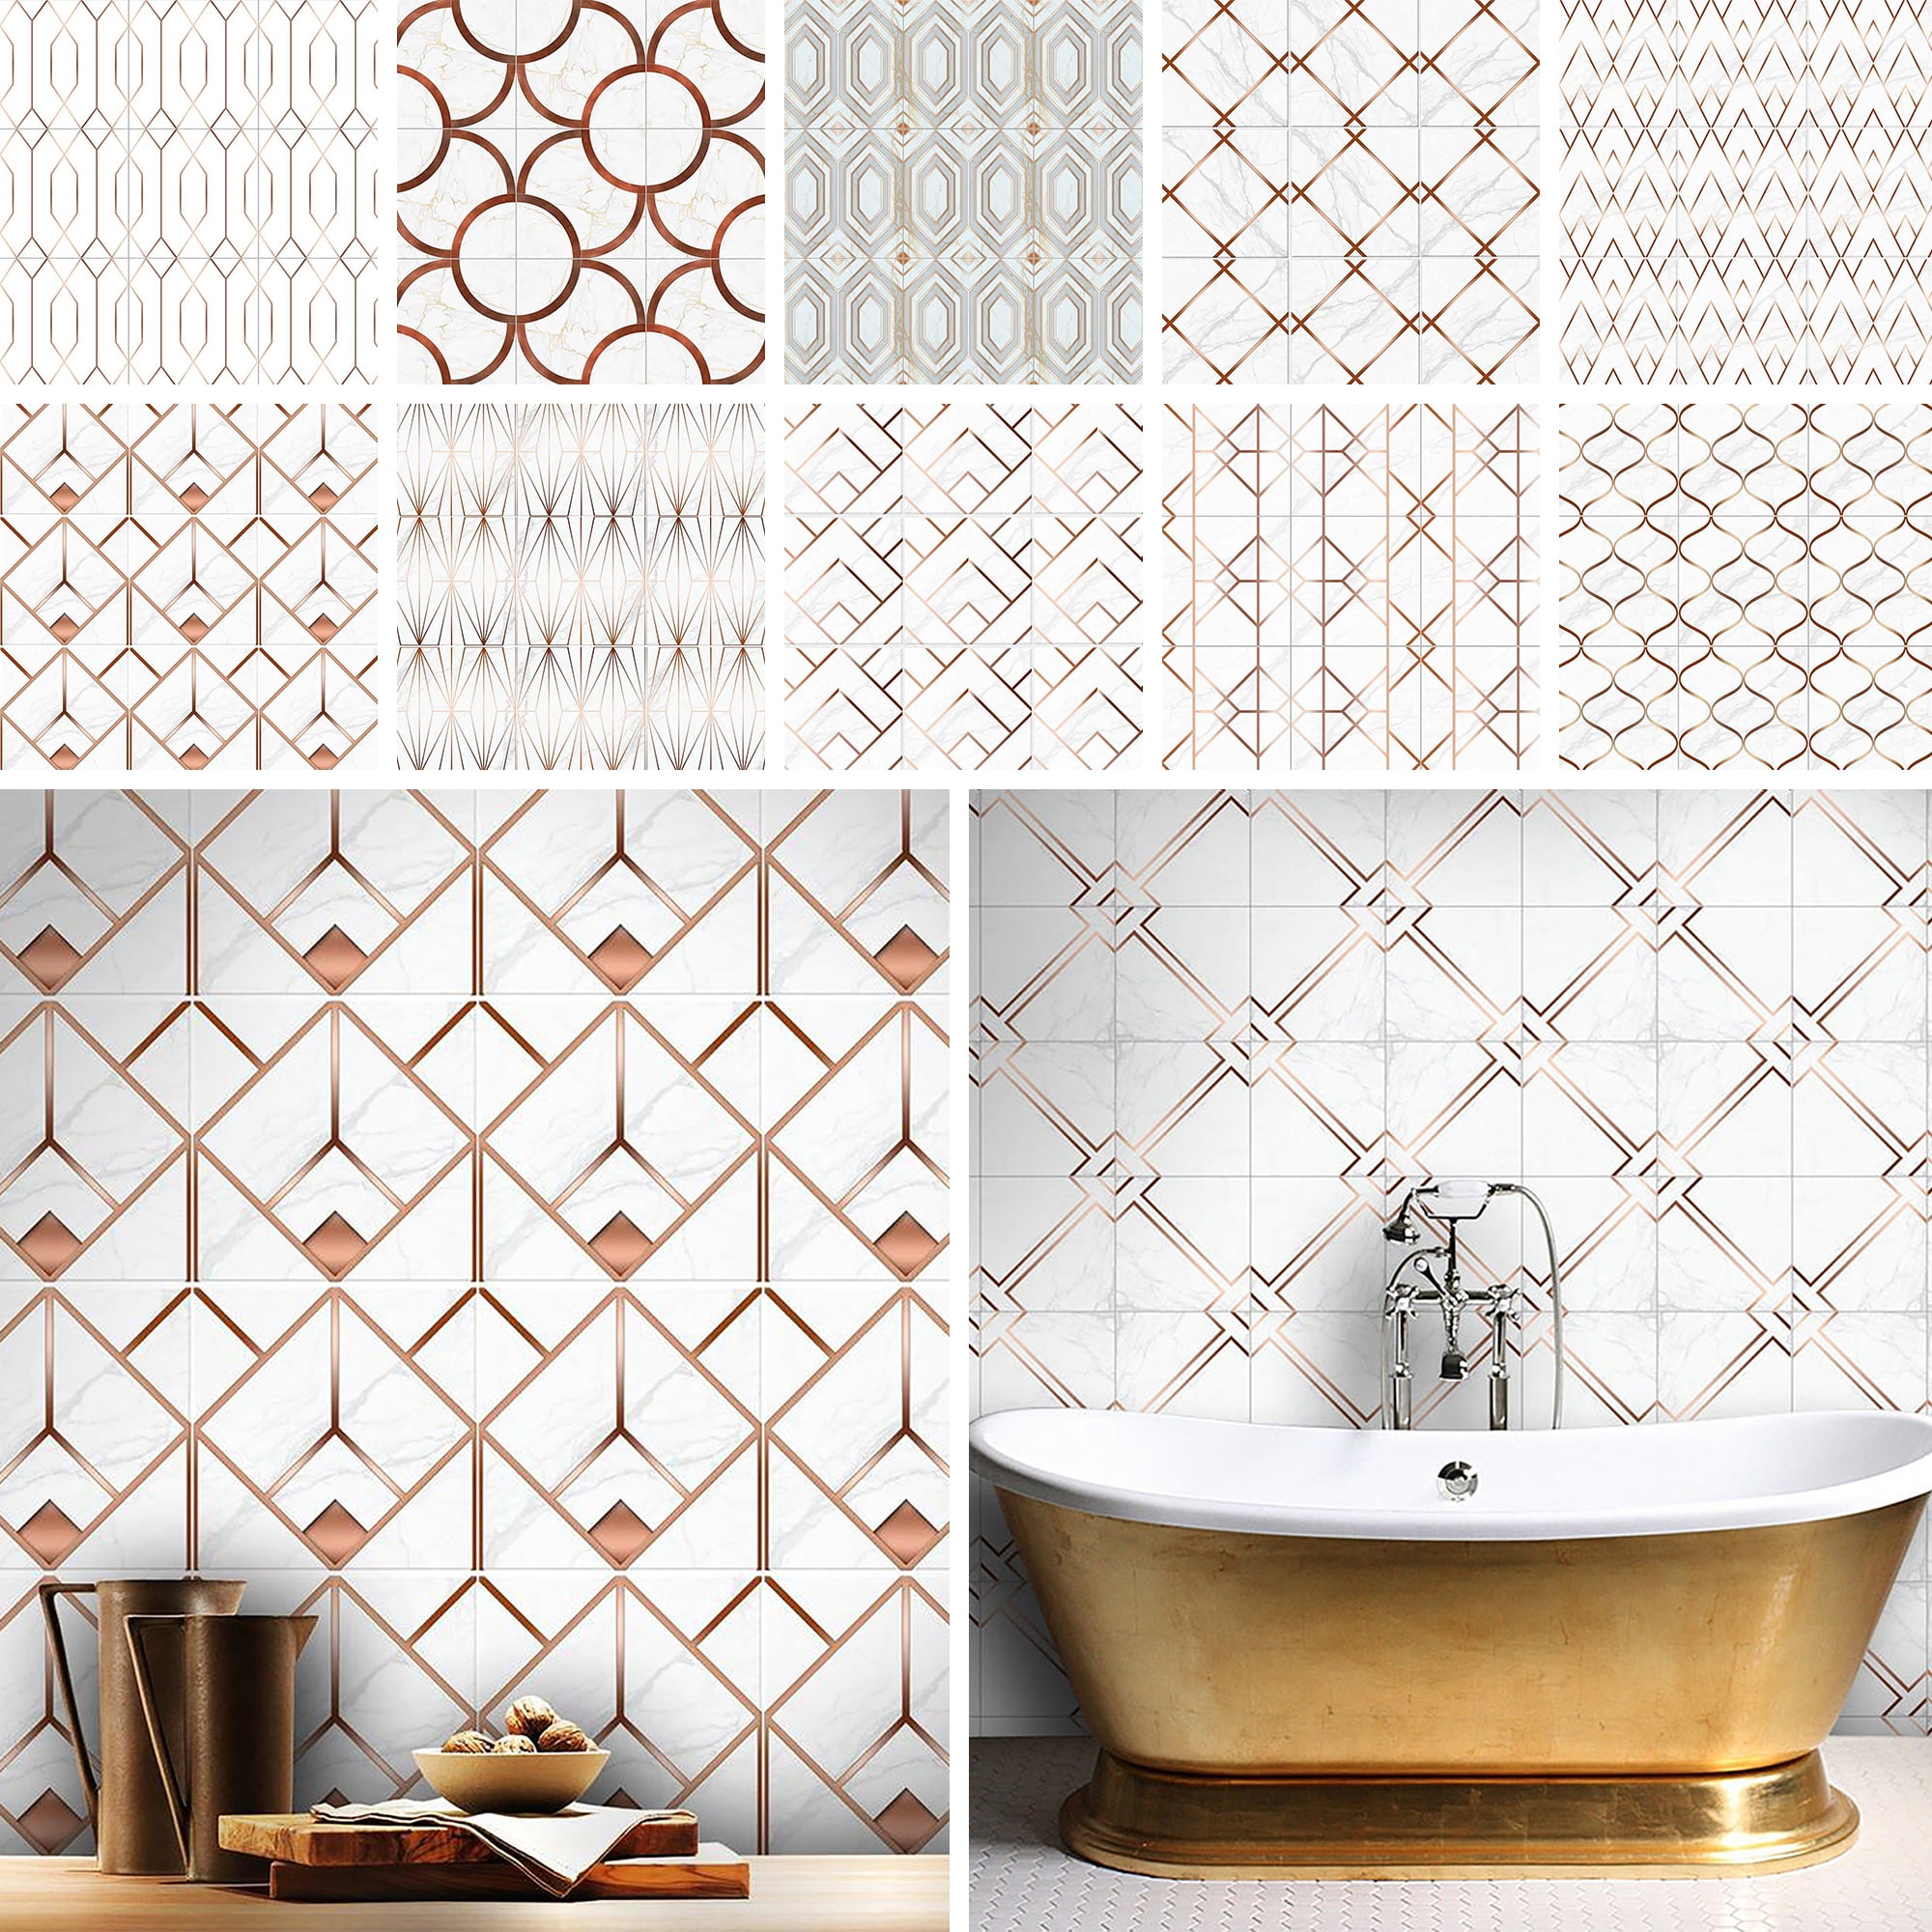 3D Mosaic Wall Sticker Self-adhesive Tile Sticker Kitchen Bathroom Decor US 